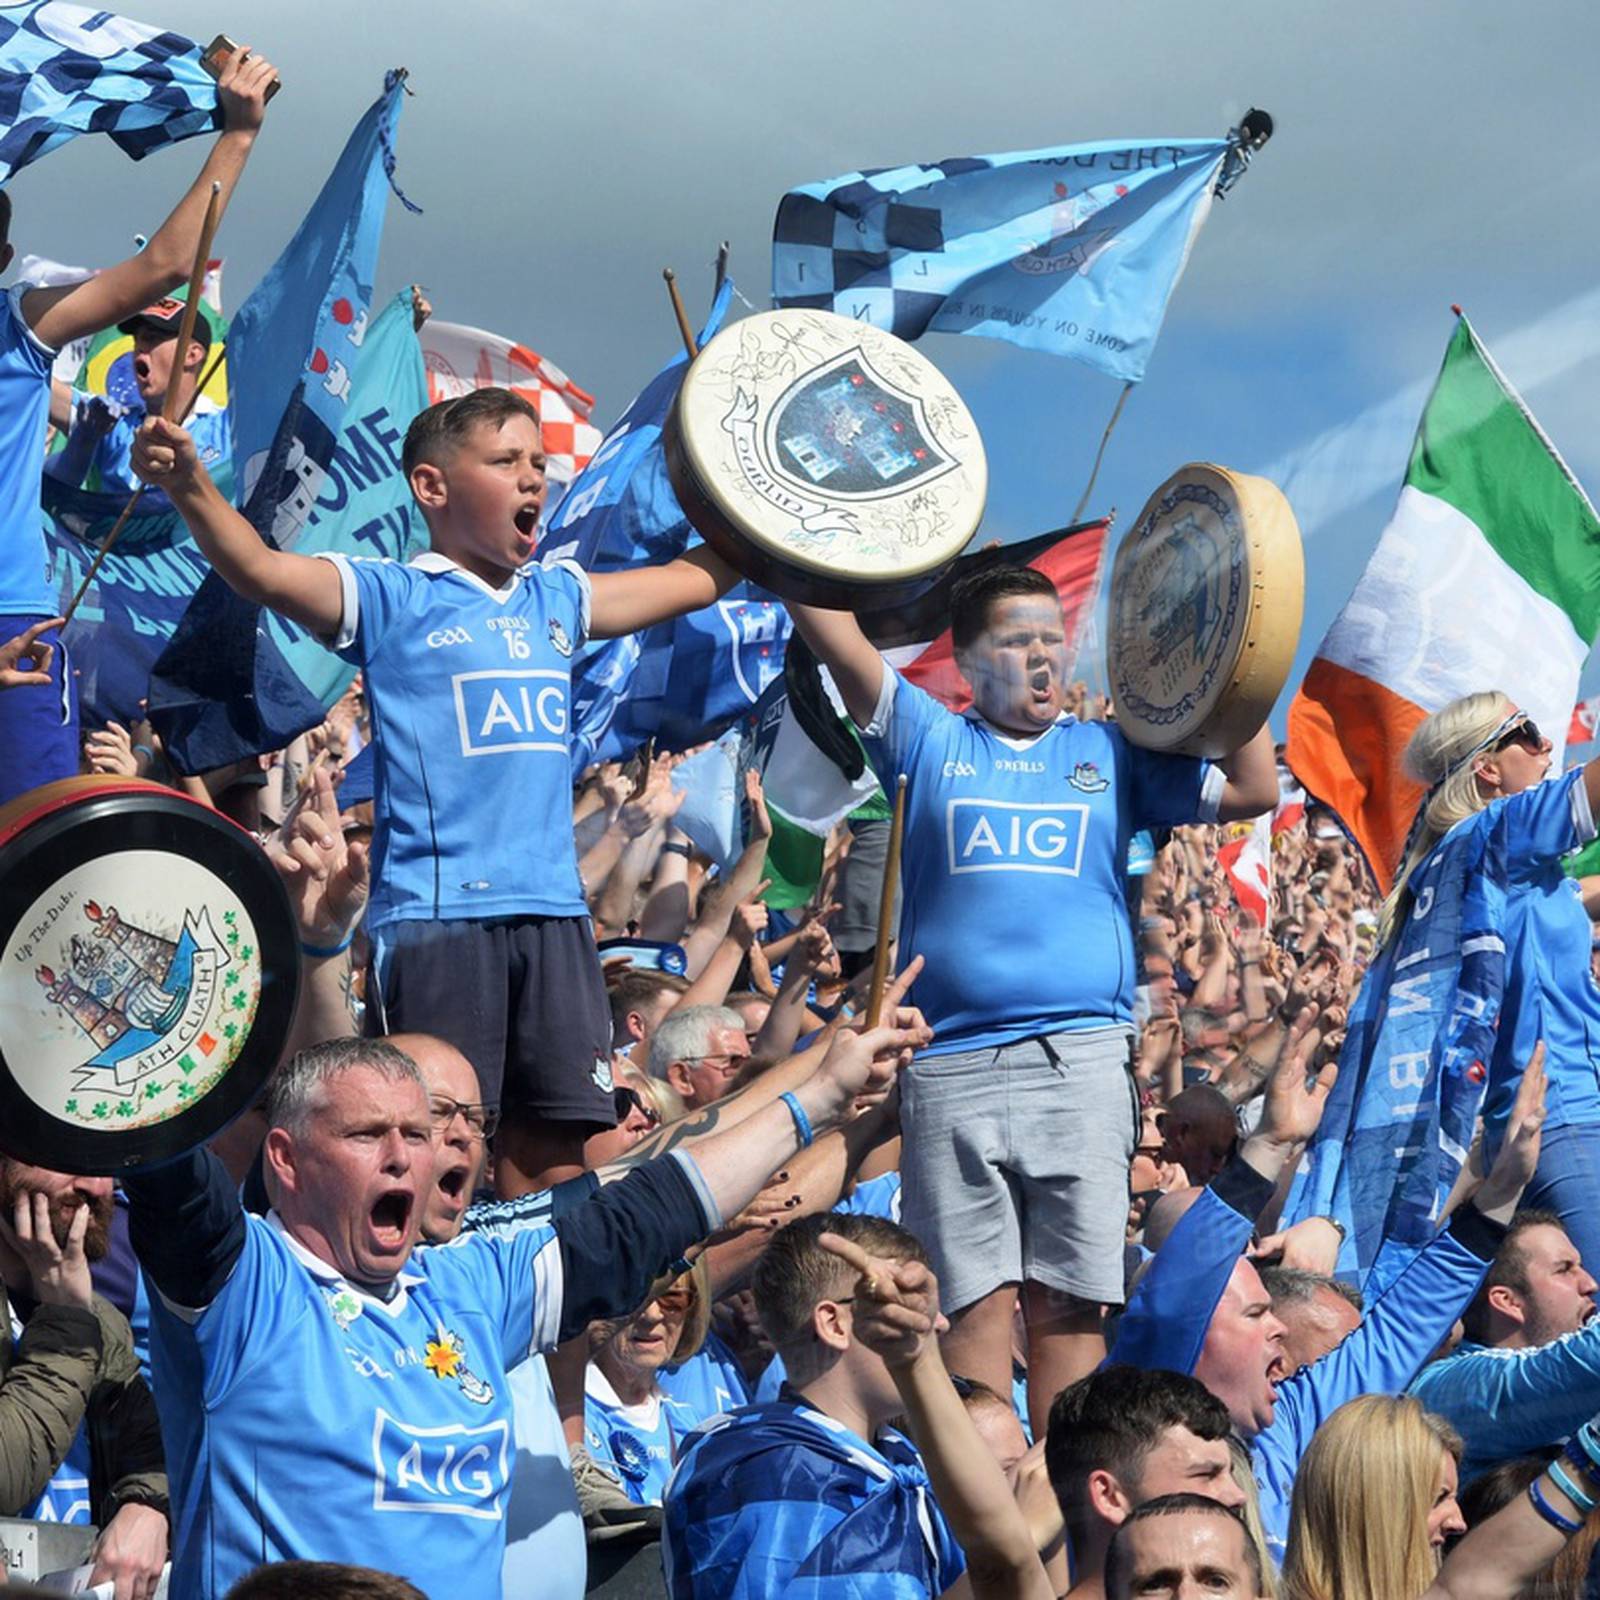 Dublin team Thousands at Plaza – The Irish Times